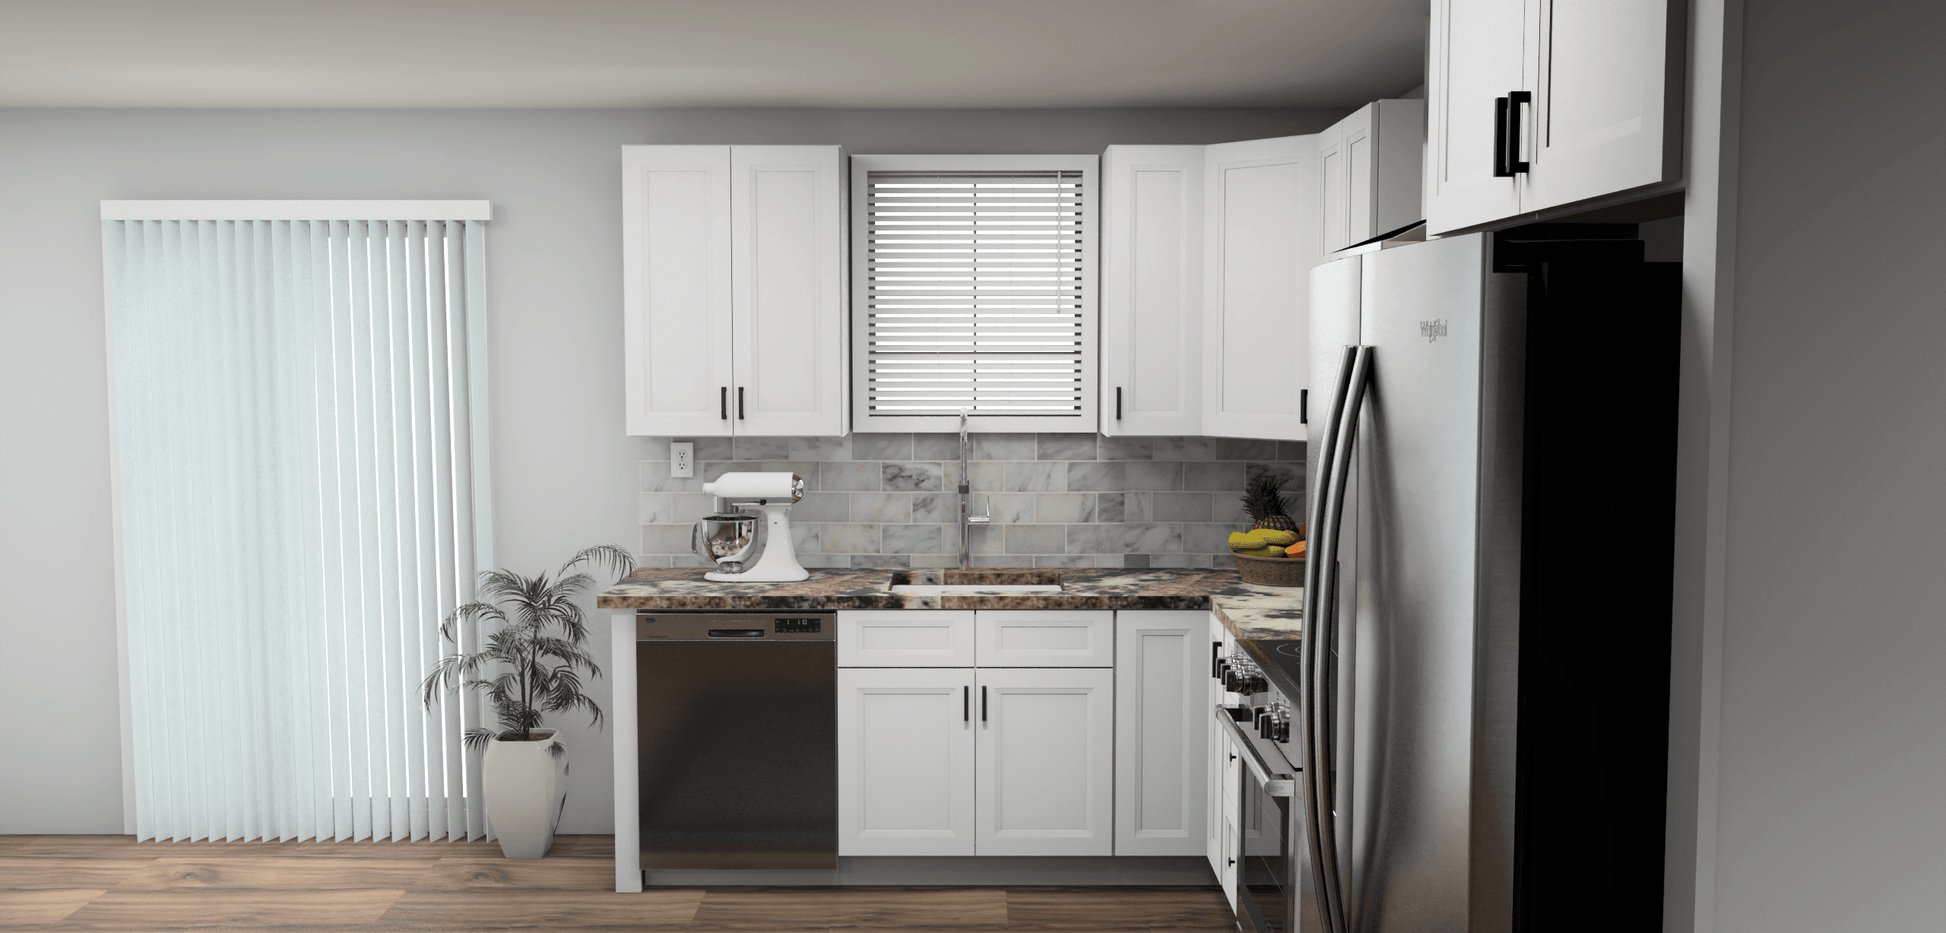 Fabuwood Allure Onyx Frost 8 x 13 L Shaped Kitchen Side Layout Photo